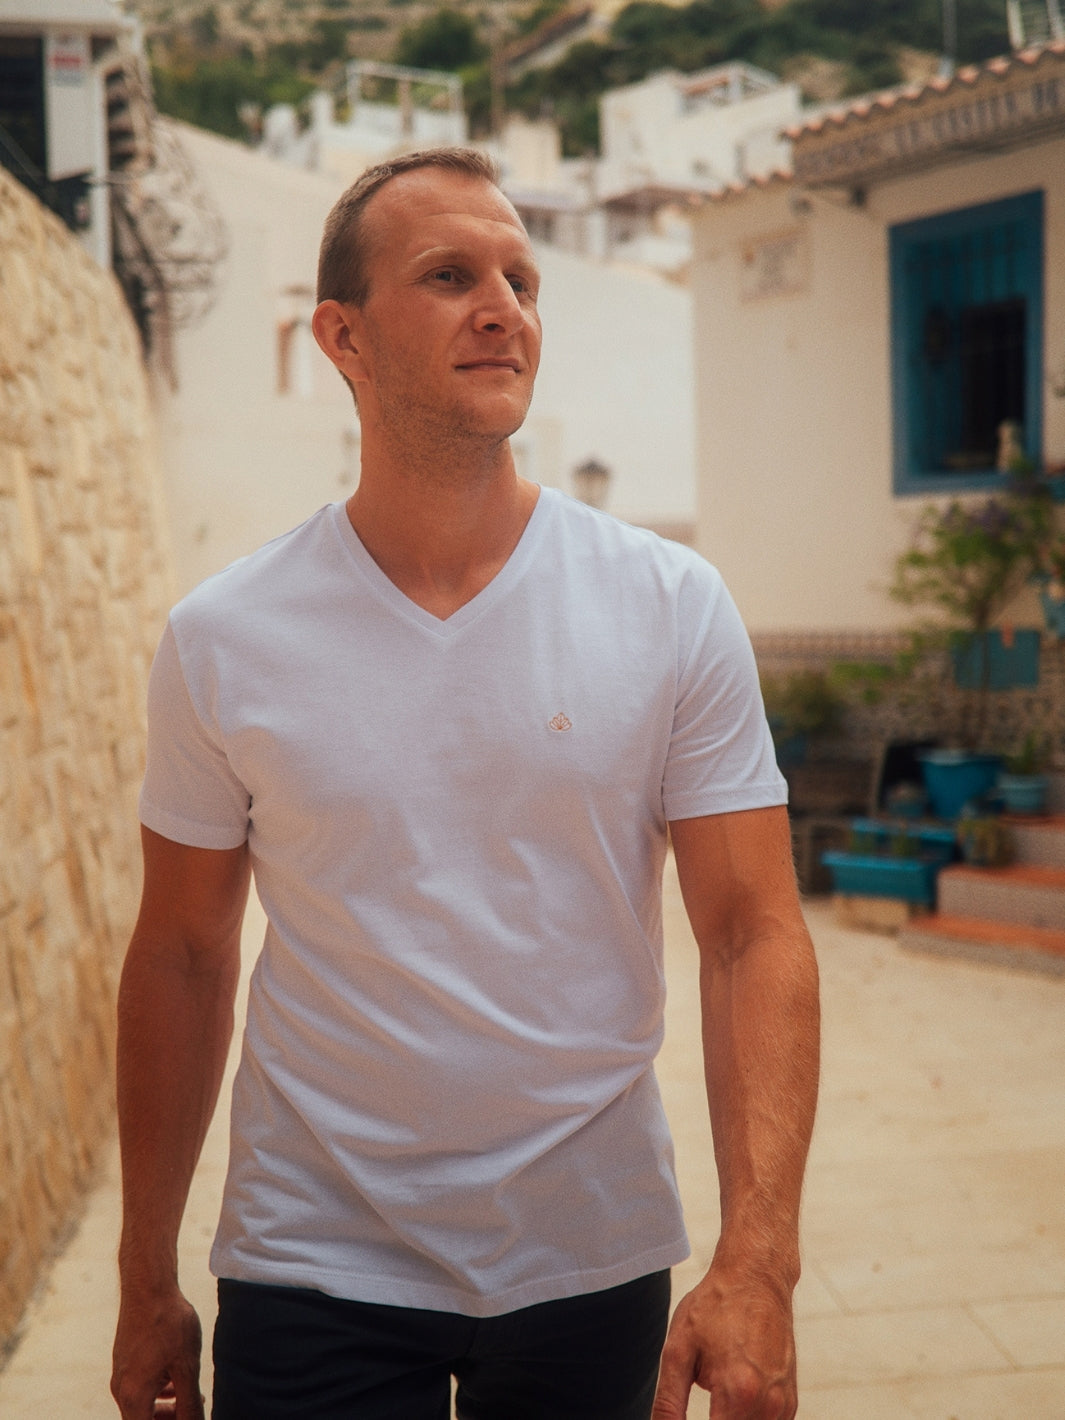 Sanremo pánské tričko s výstřihem do V z biobavlny bílé muž jde po ulici